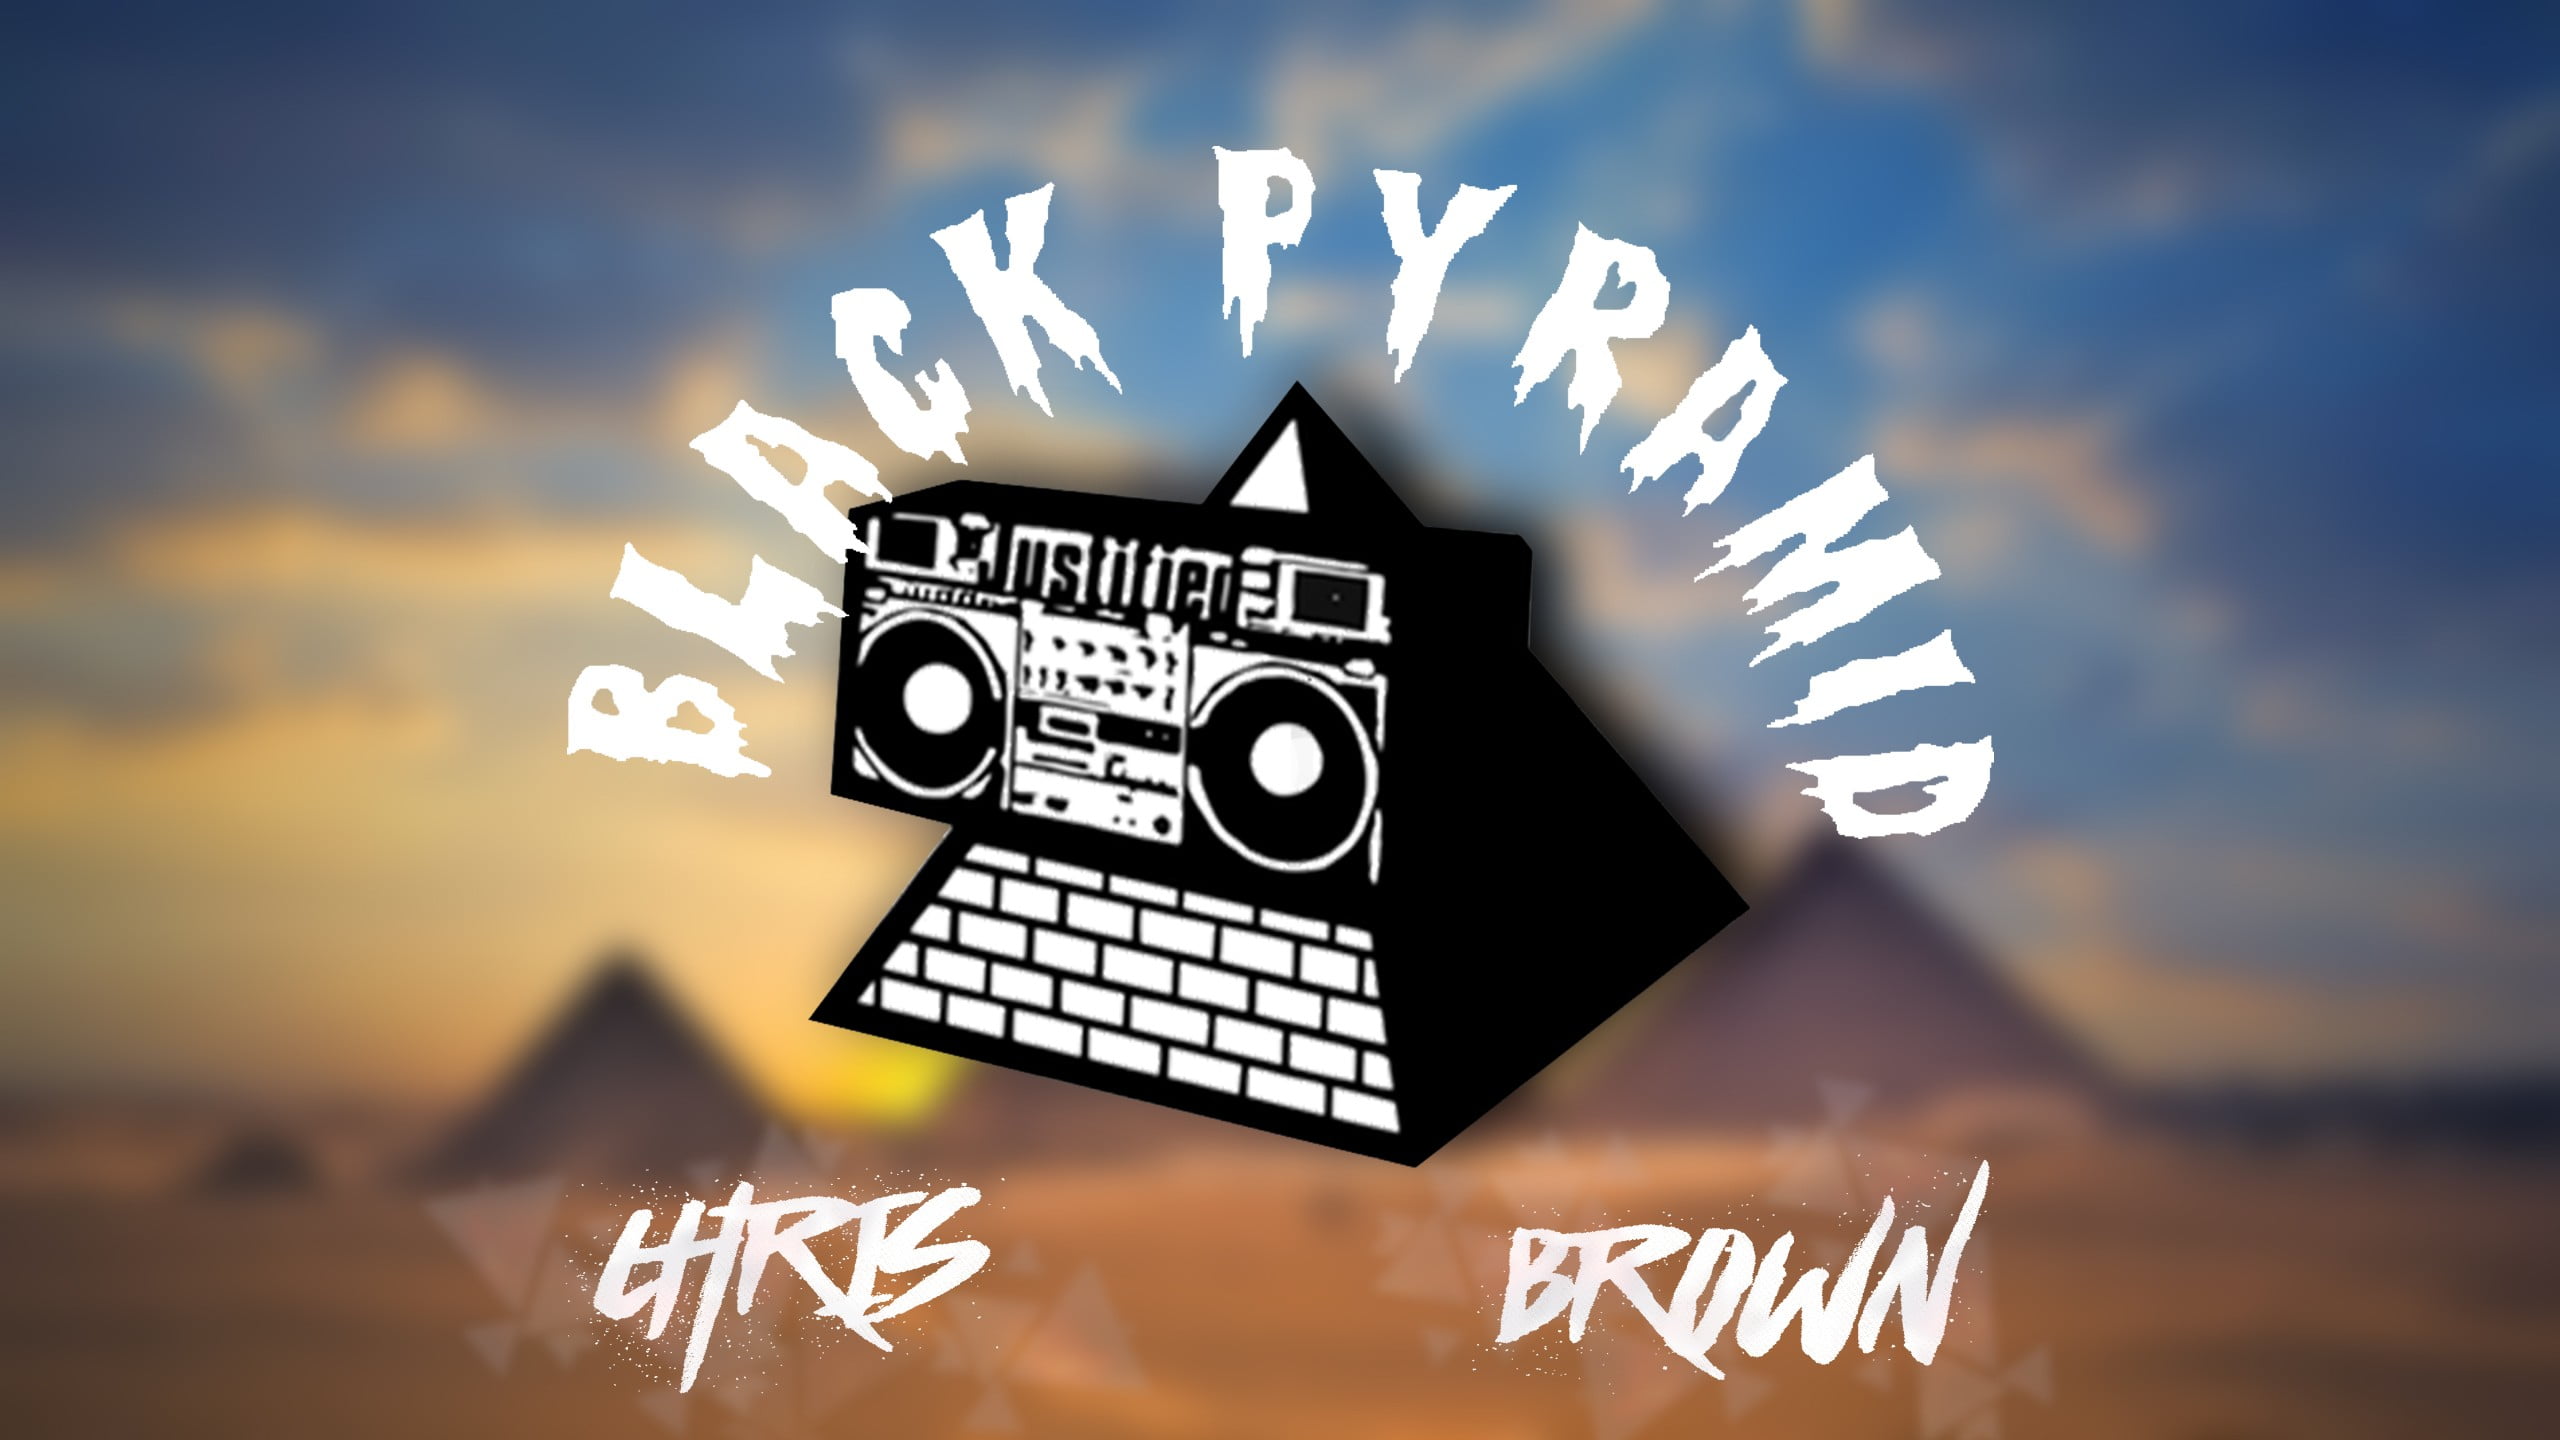 Black Pyramid Chris Brown Album Wallpaper